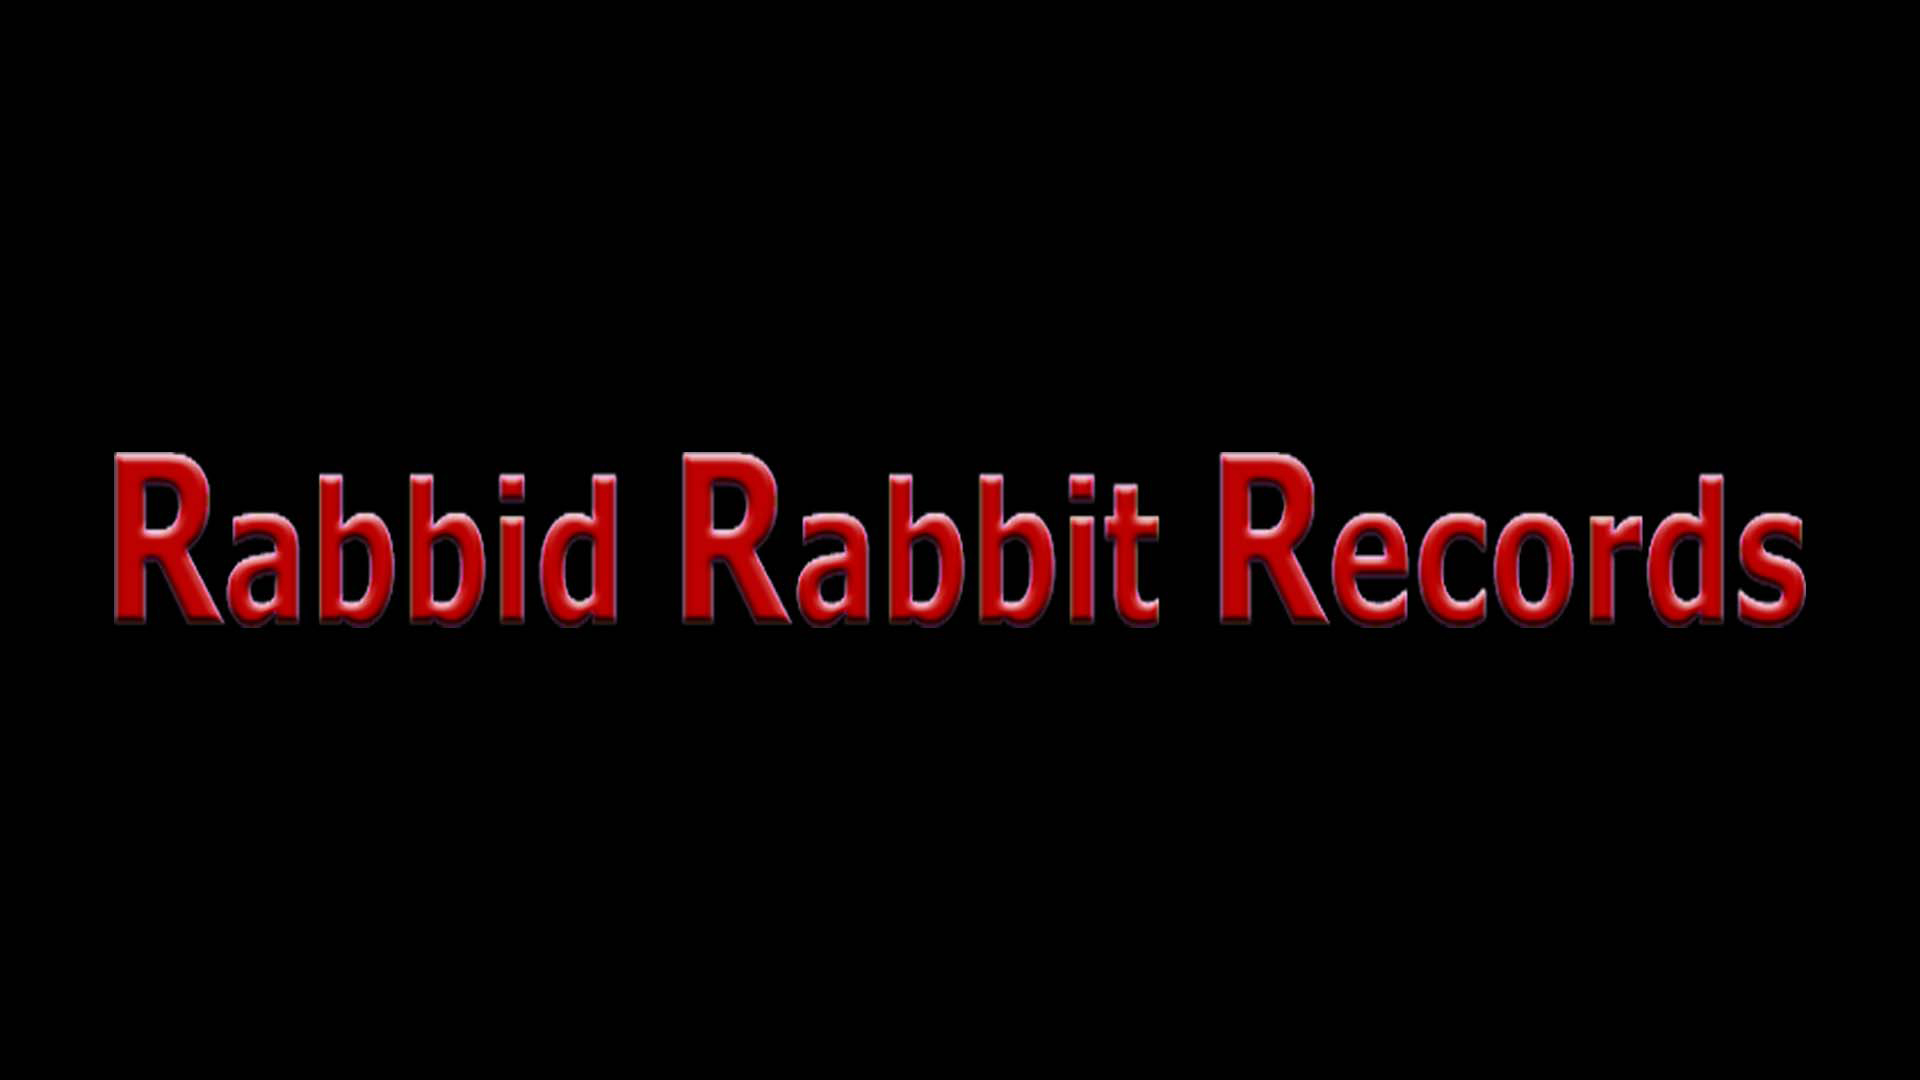 Rabbid Rabbit Records' Upcoming Tradition